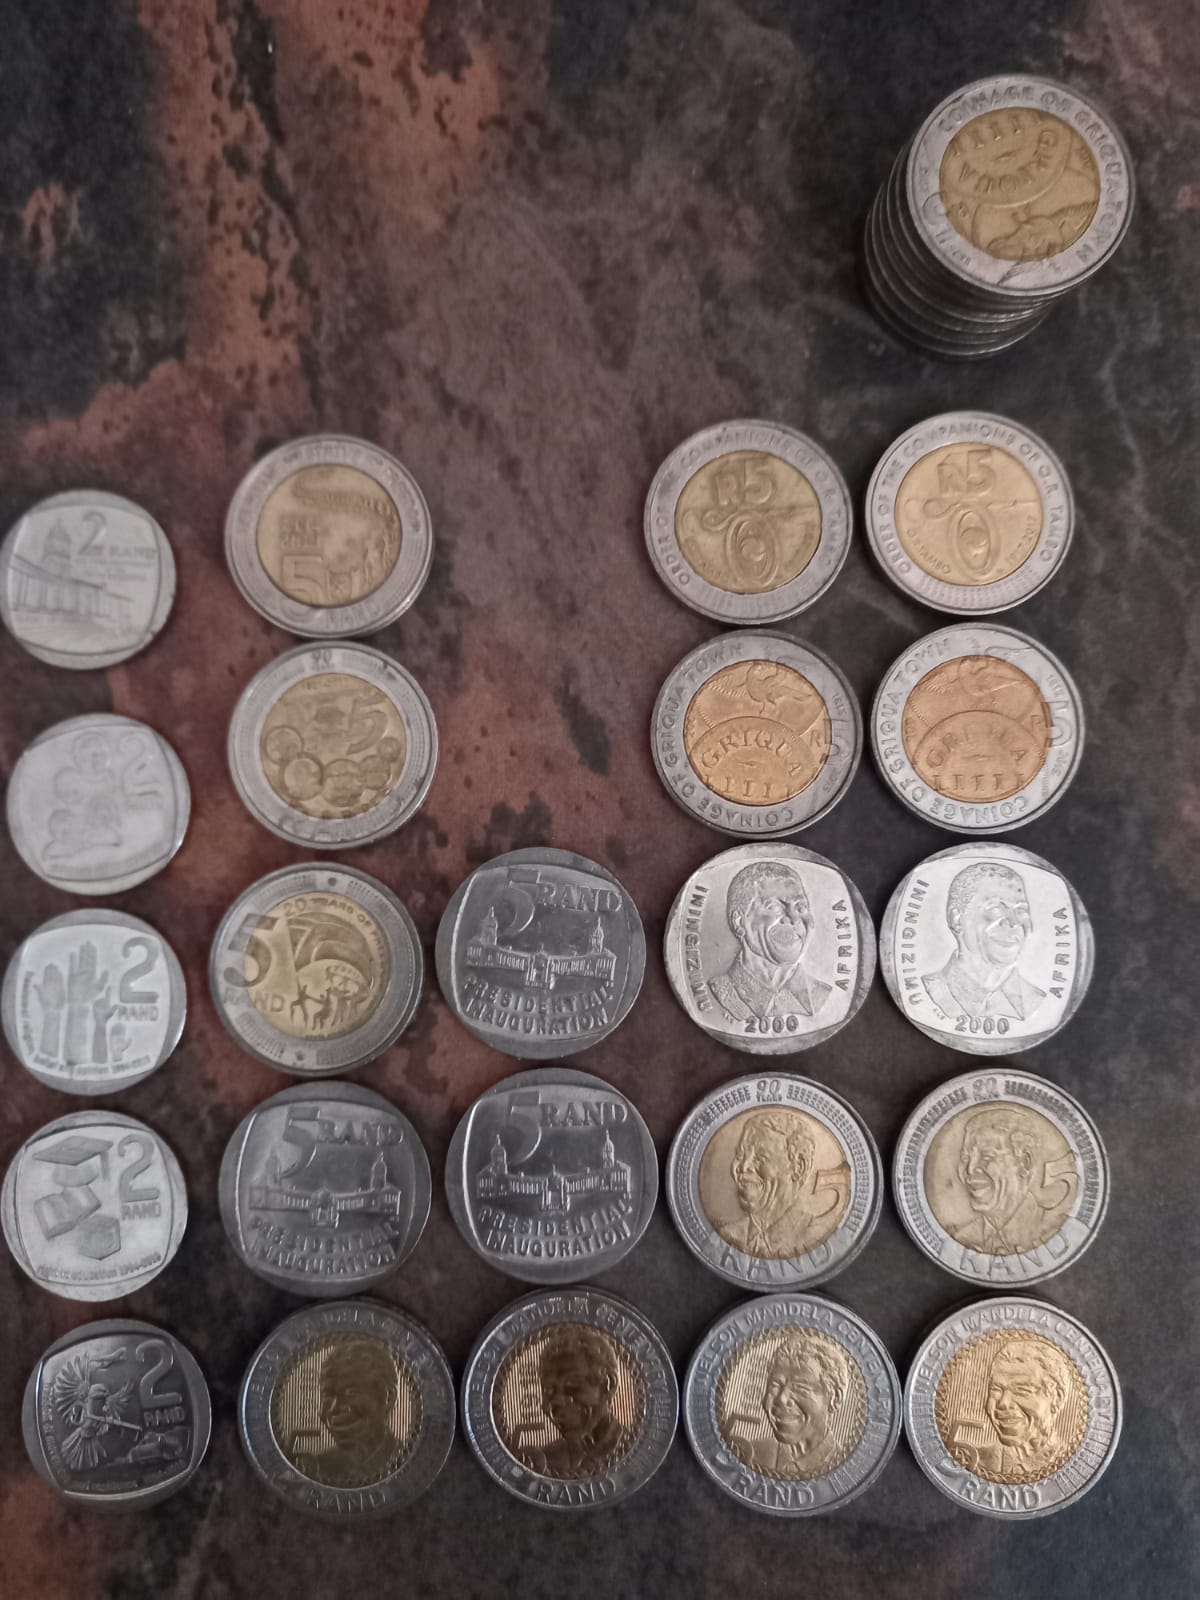 Mandela 5rand coins, all for ten thousand rand, whatsap zero609five73two83 